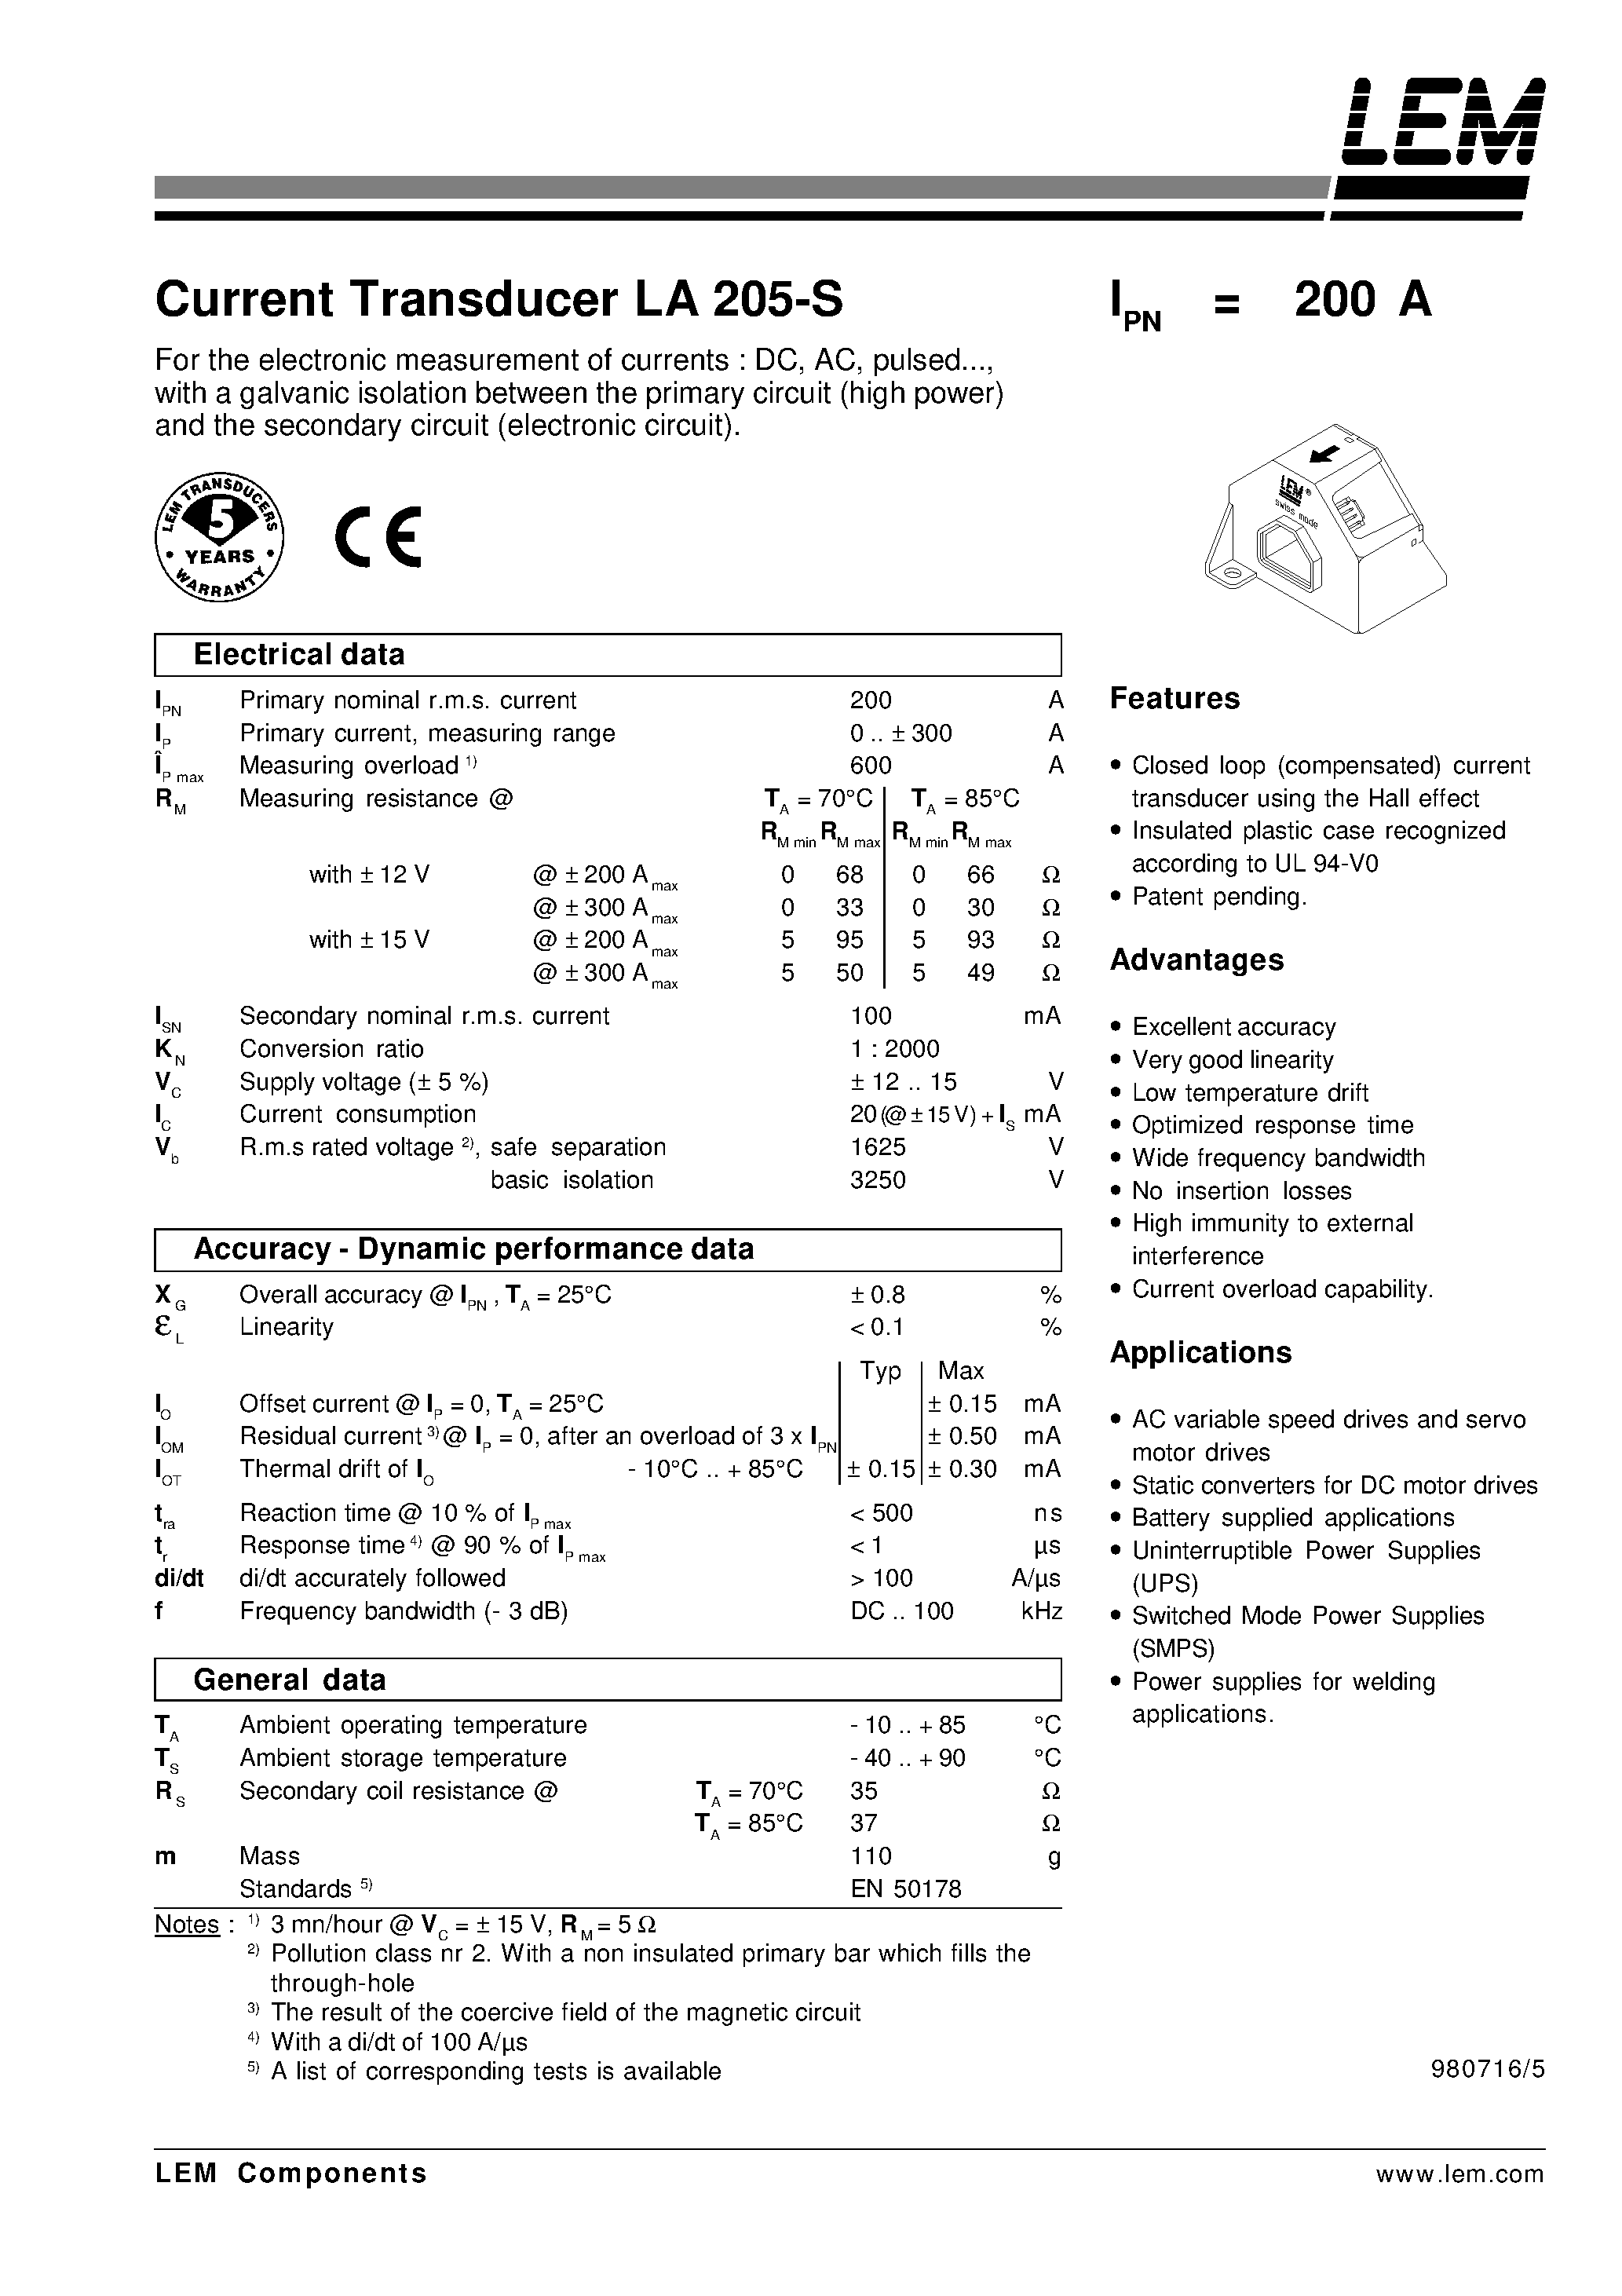 Datasheet LA205-S - Current Transducer LA 205-S page 1